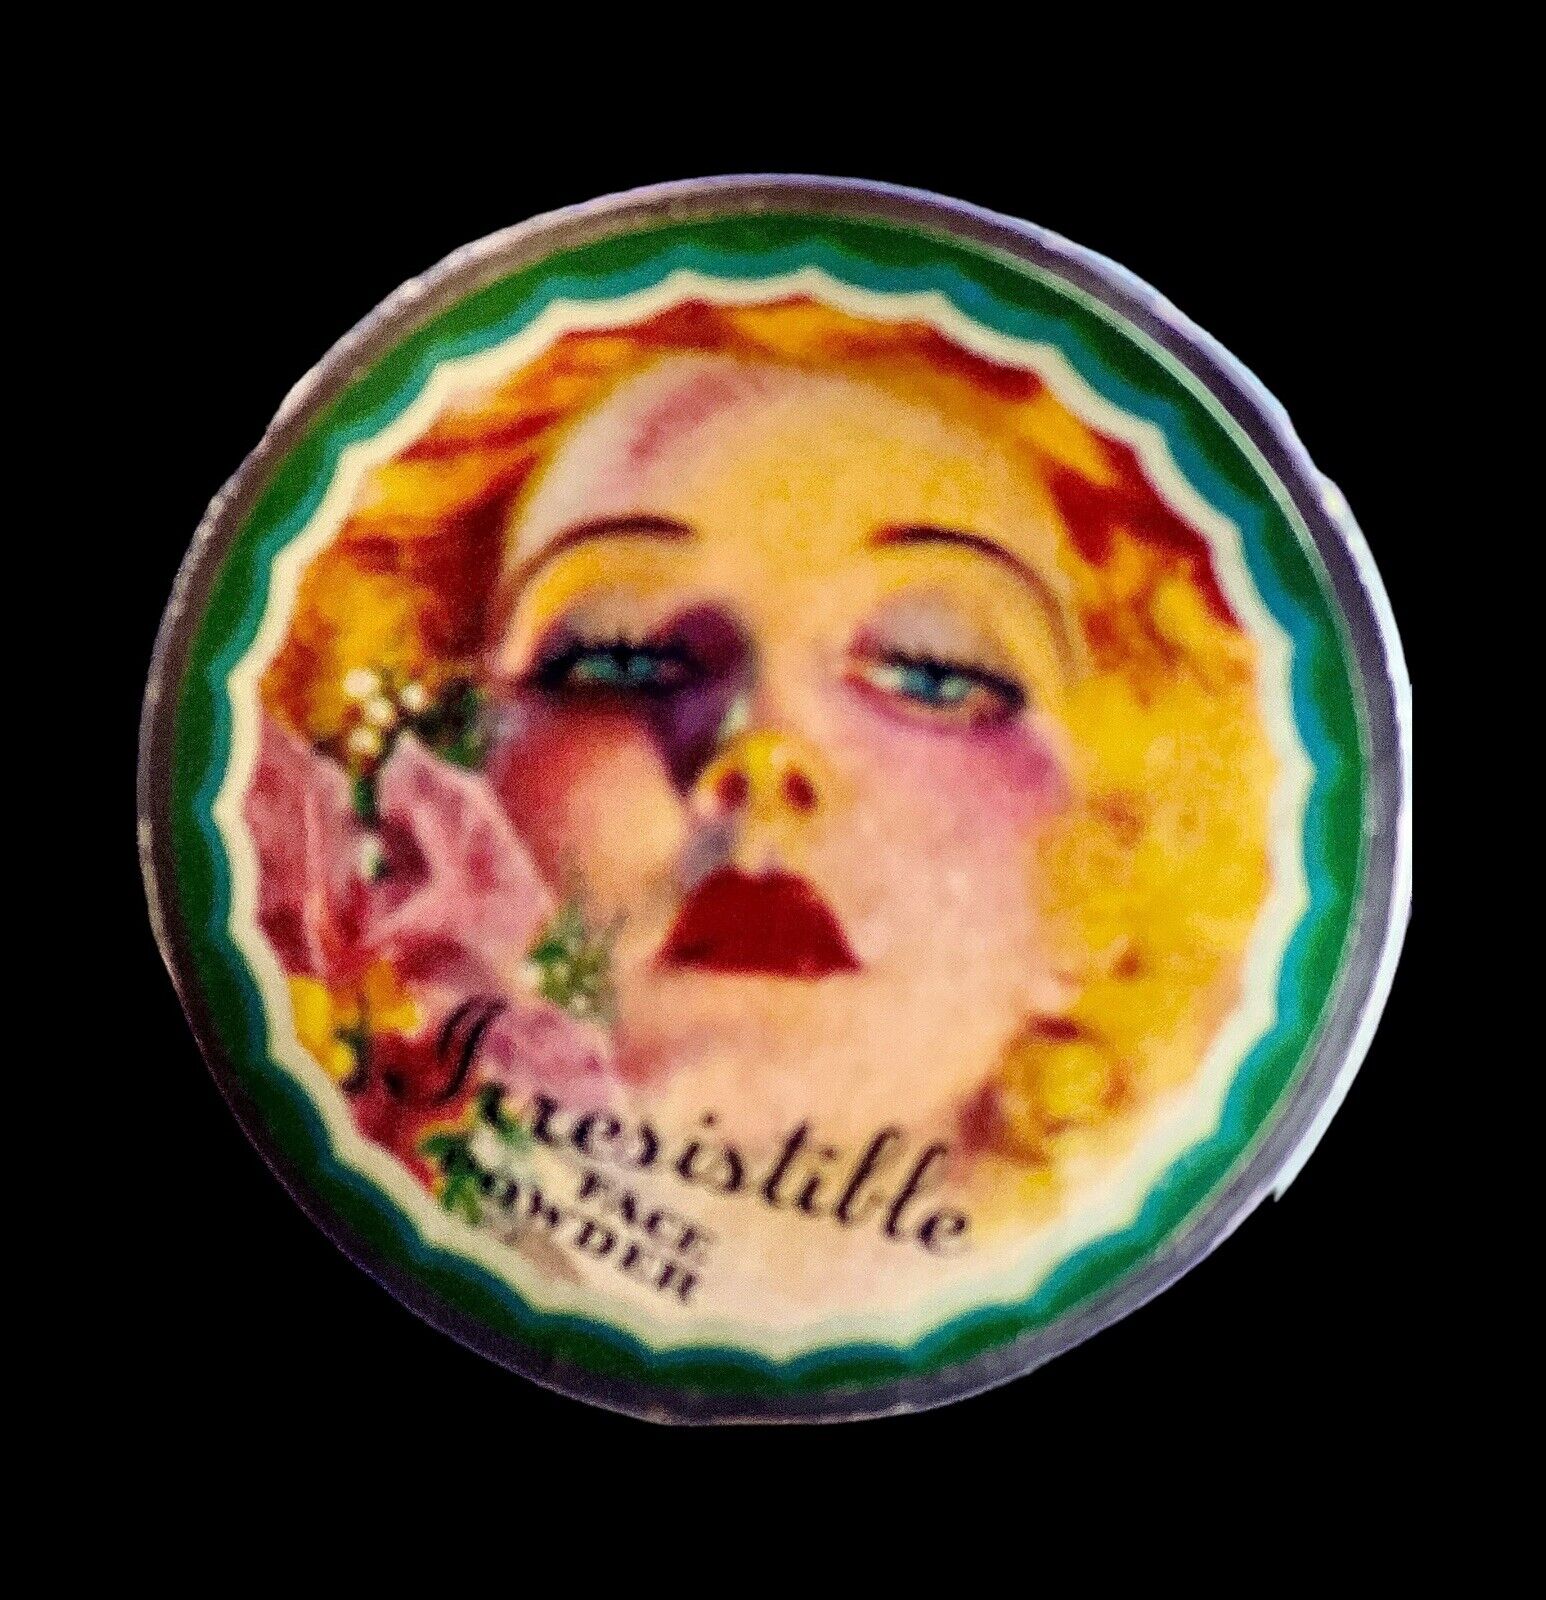 Vintage 1920/30’s “Irresistible” Face Powder Glamorous Woman 2.75” X .75” Empty